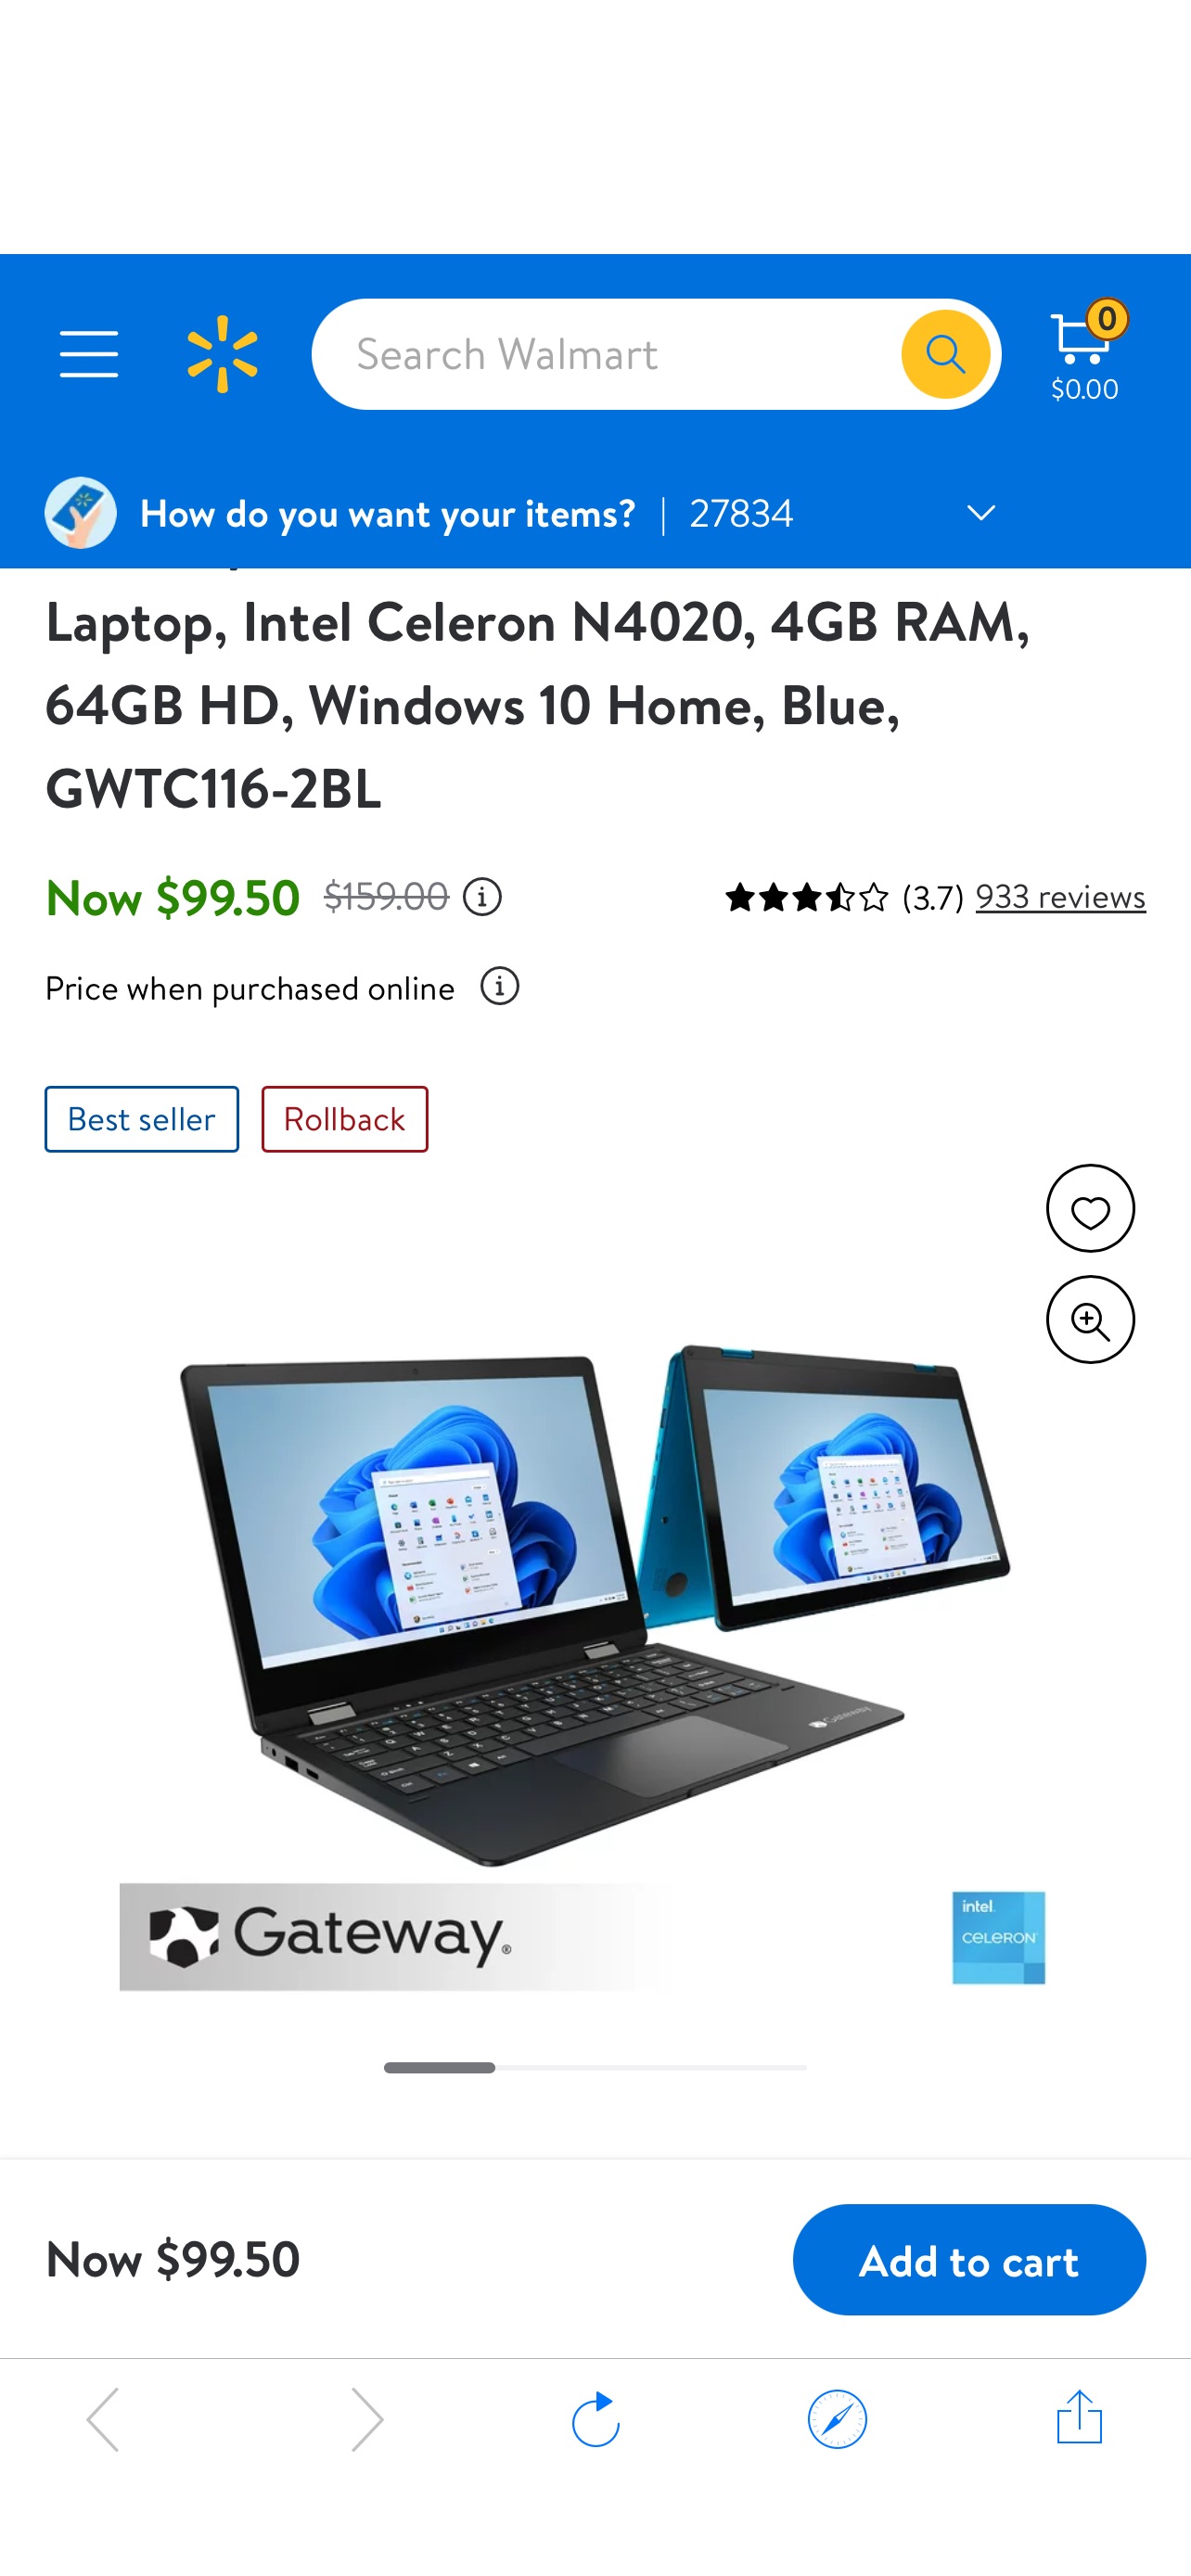 Gateway Notebook 11.6" Touchscreen 2-in-1s Laptop, Intel Celeron N4020, 4GB RAM, 64GB HD, Windows 10 Home, Blue, GWTC116-2BL - Walmart.com